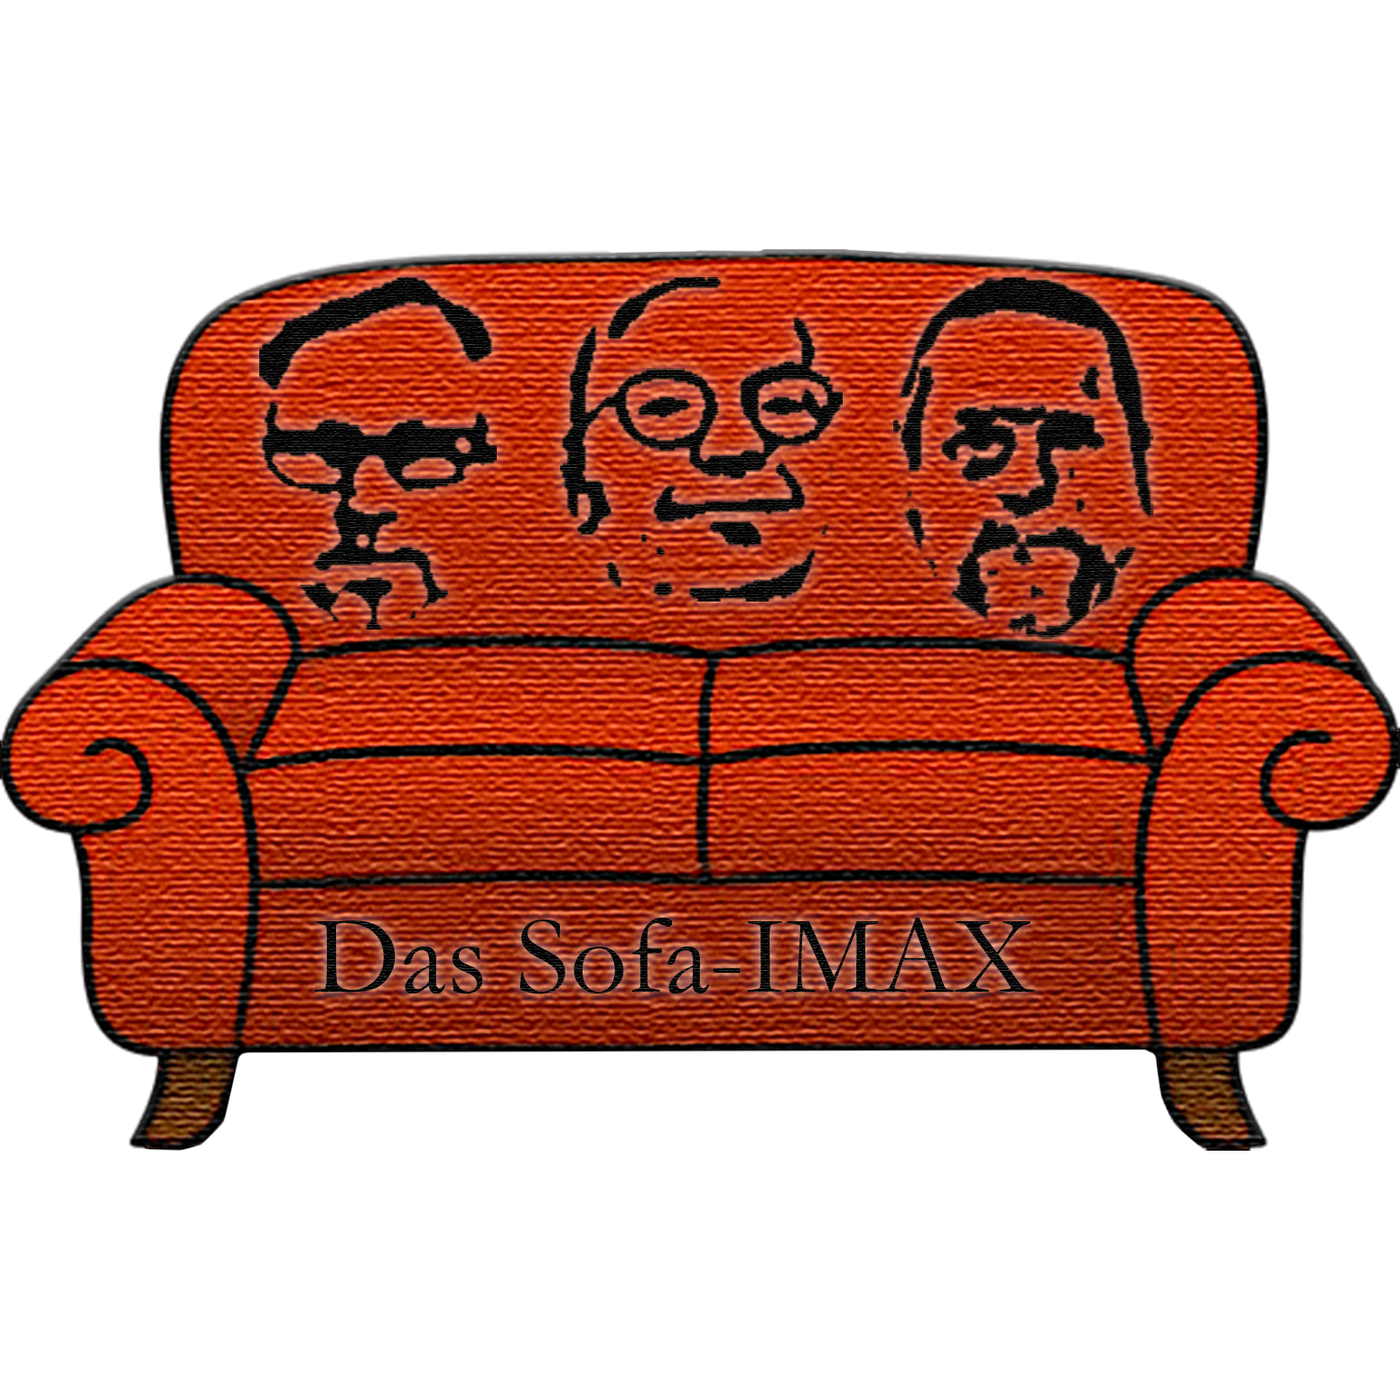 Das Sofa-IMAX